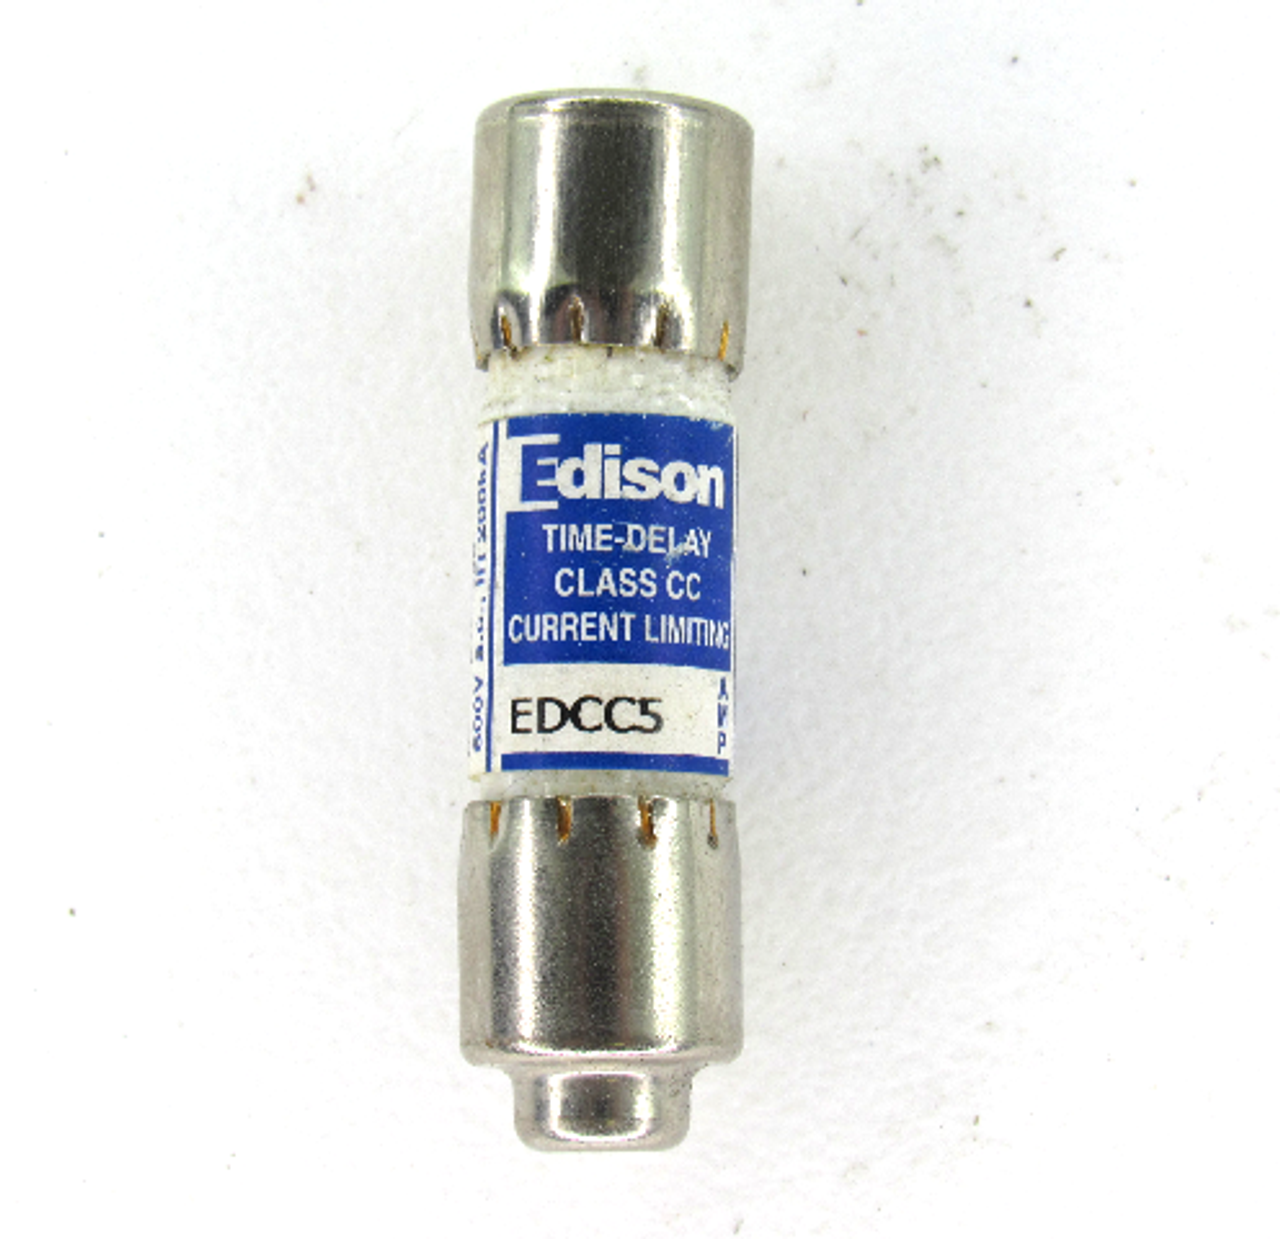 Edison EDCC5 Time-Delay Fuse, 5 Amp, 600V AC Current Limiting